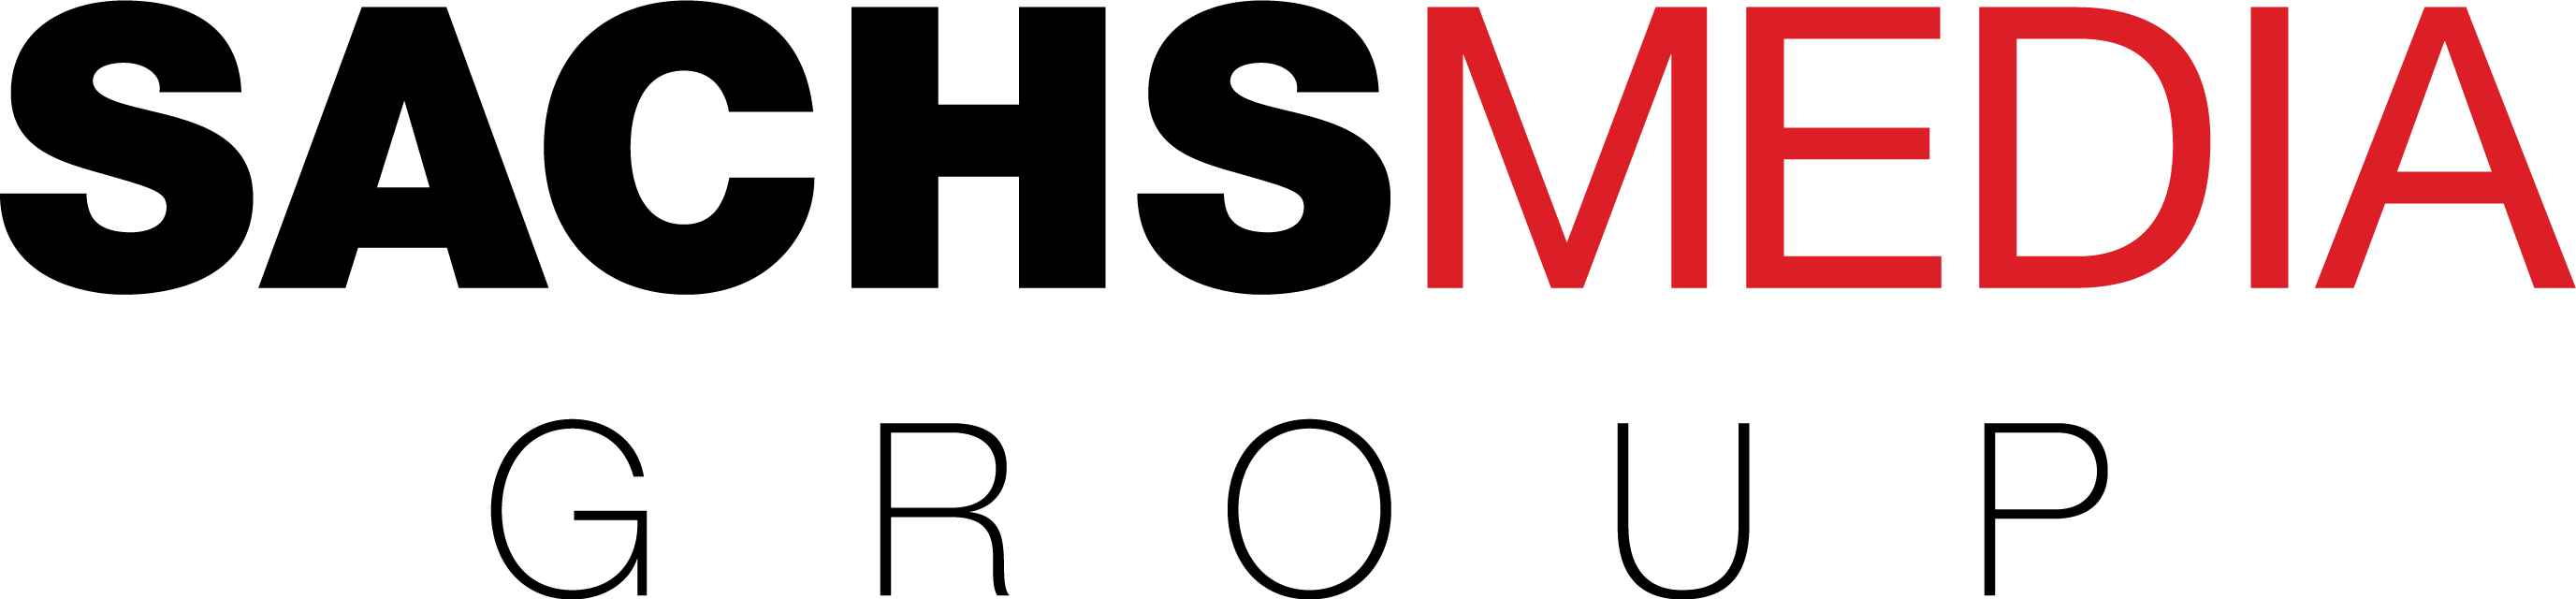 Sachs-Media-logo.png